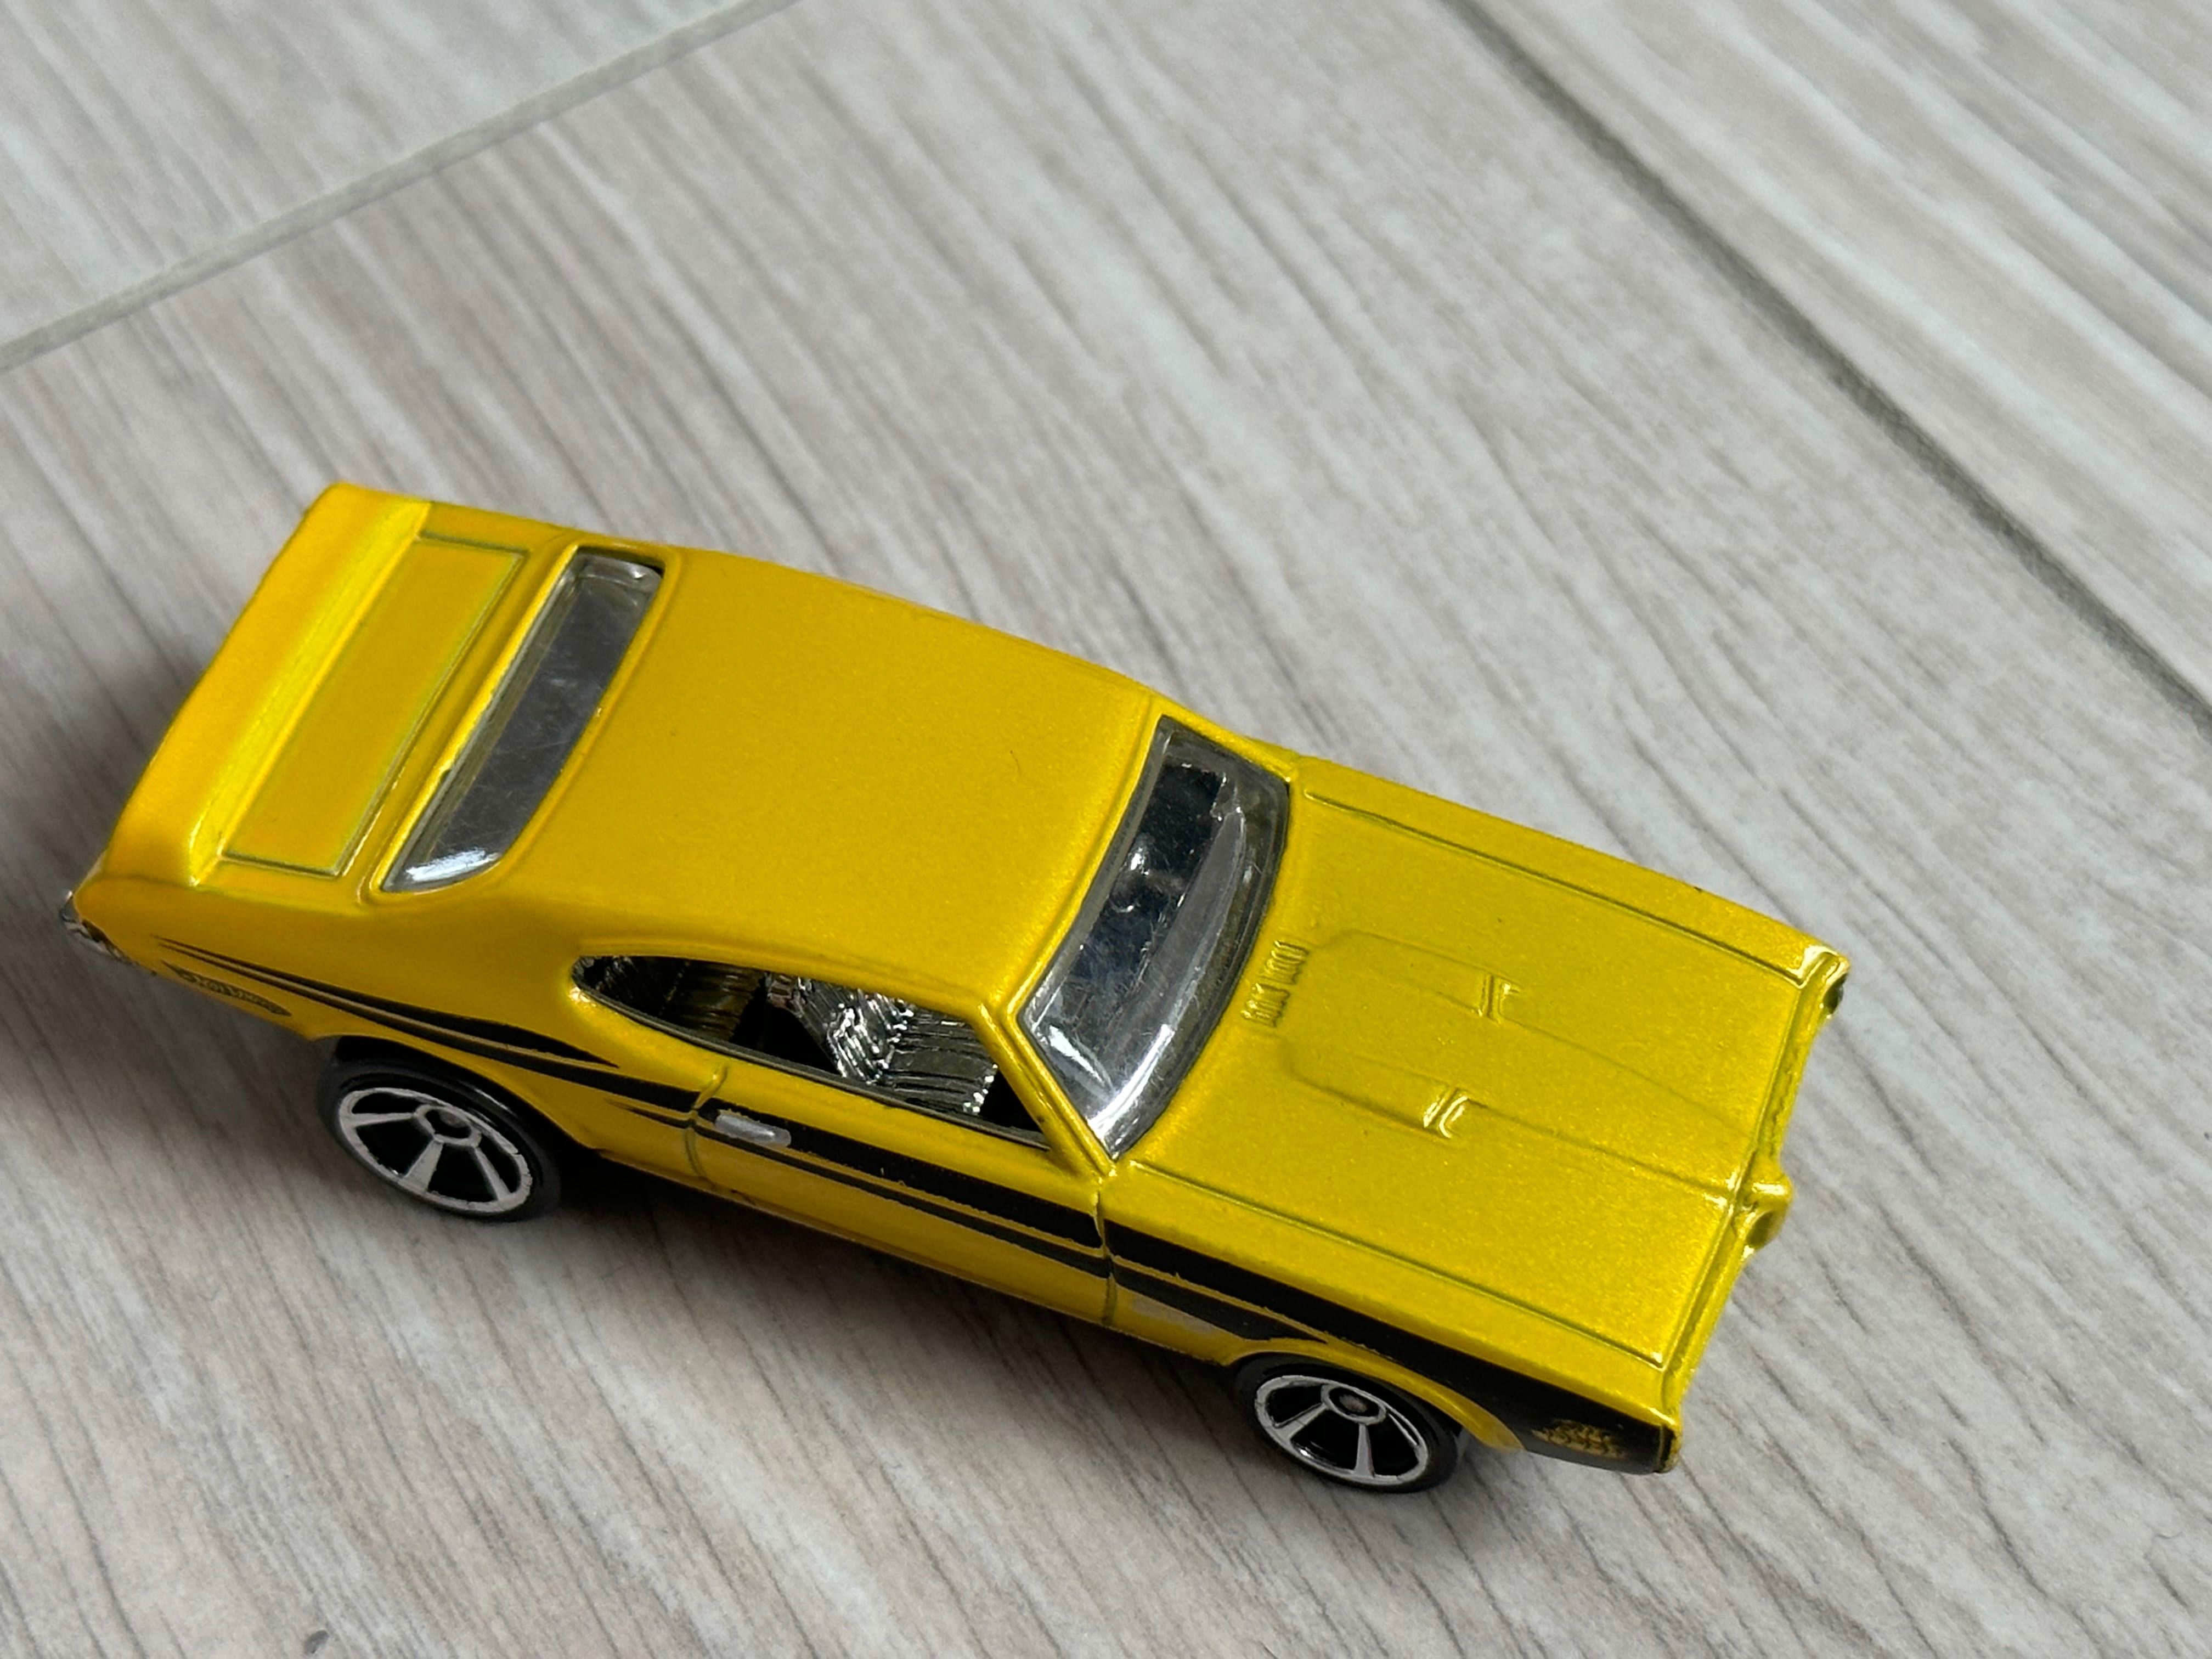 Model samochodu Pontiac GTO Hot Wheels.